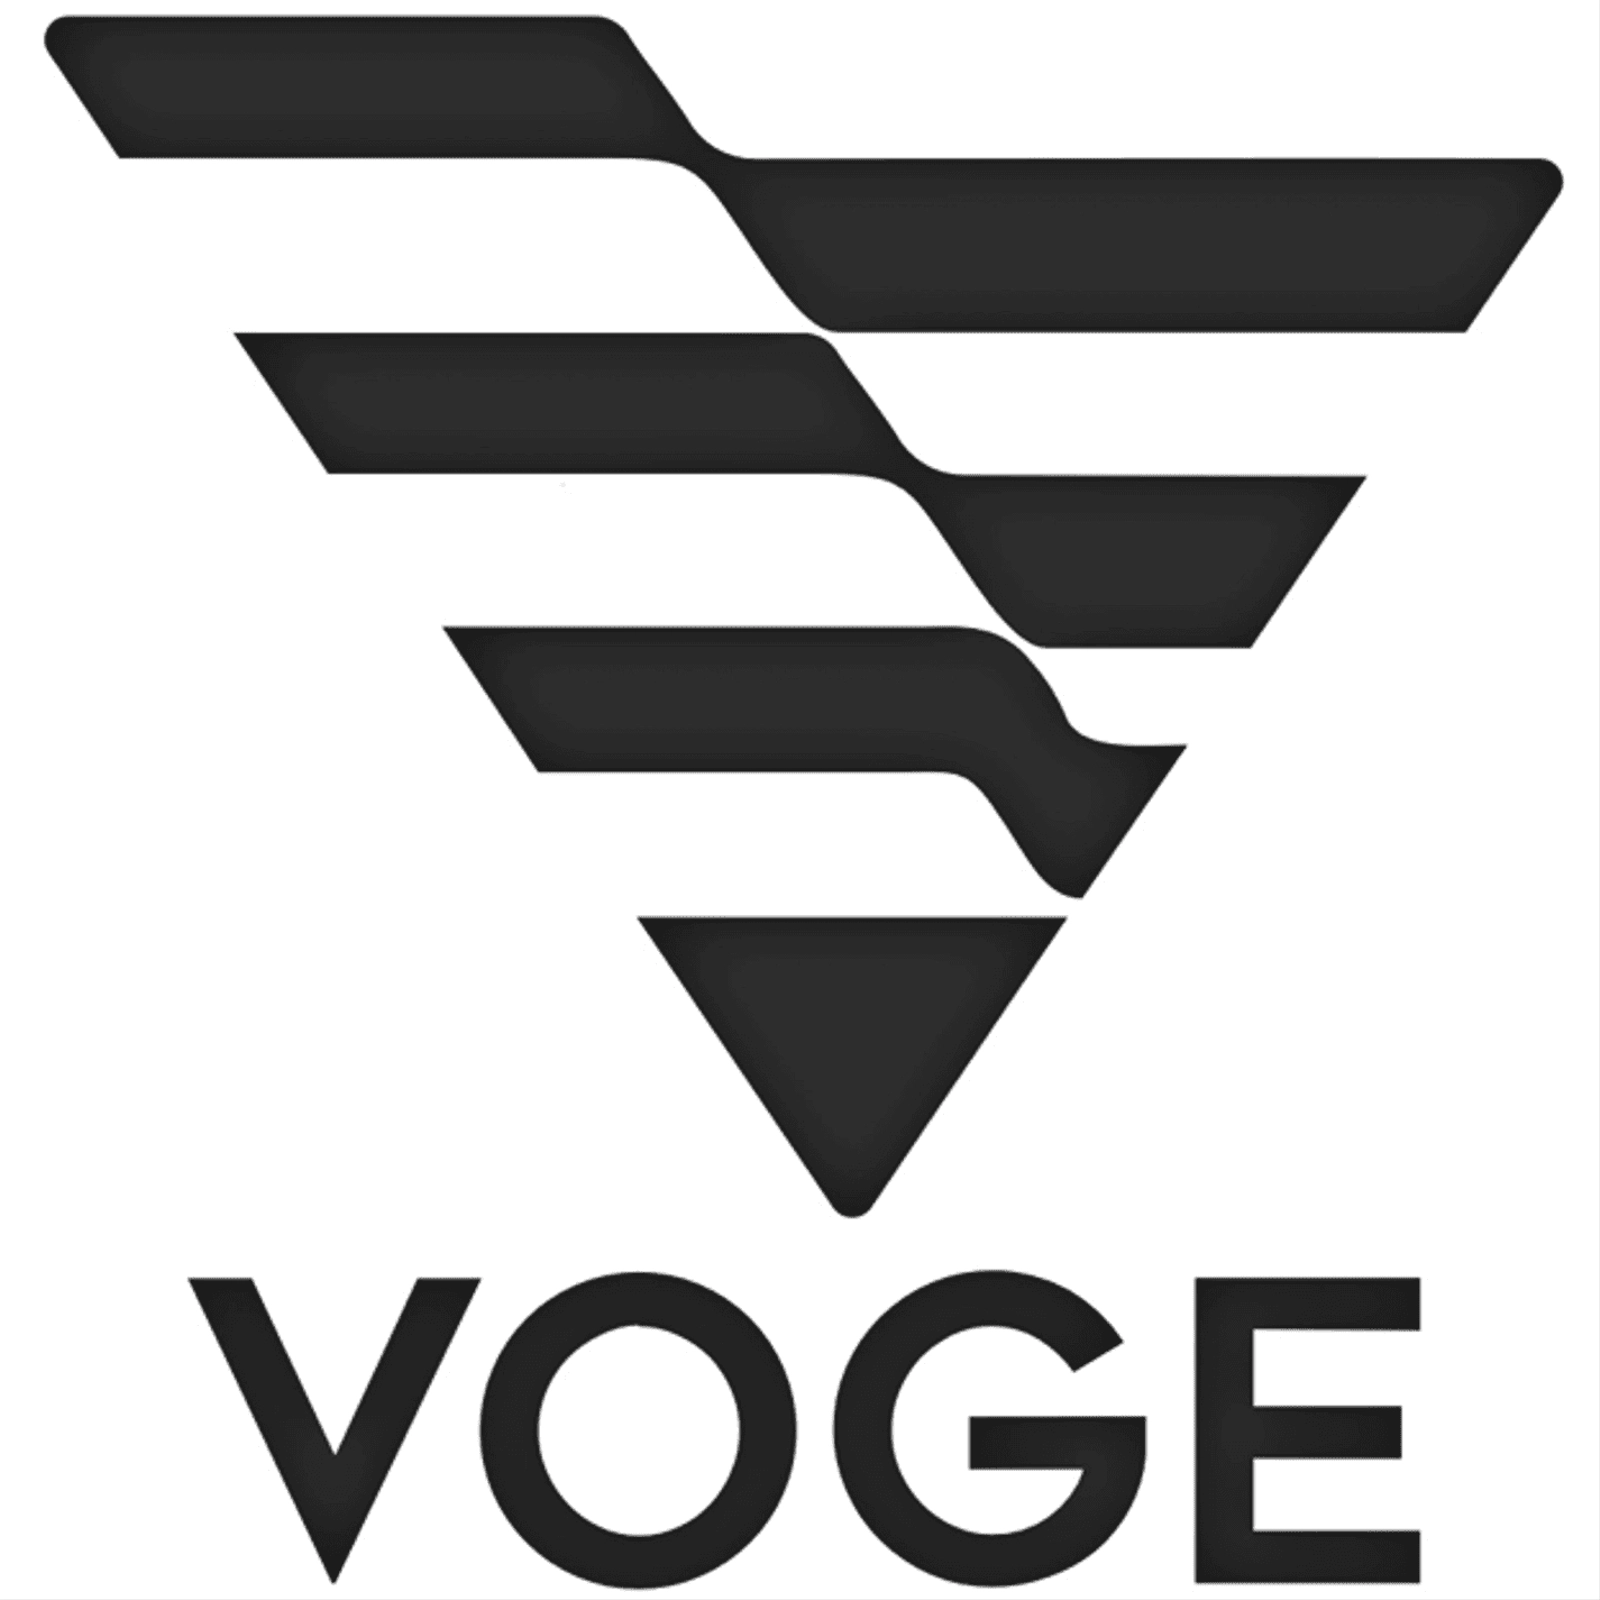 Логотип мототехники Vogue. Loncin логотип. ALPHAMOTO логотип. Logo Loncin Motorcycle. Voge adventure